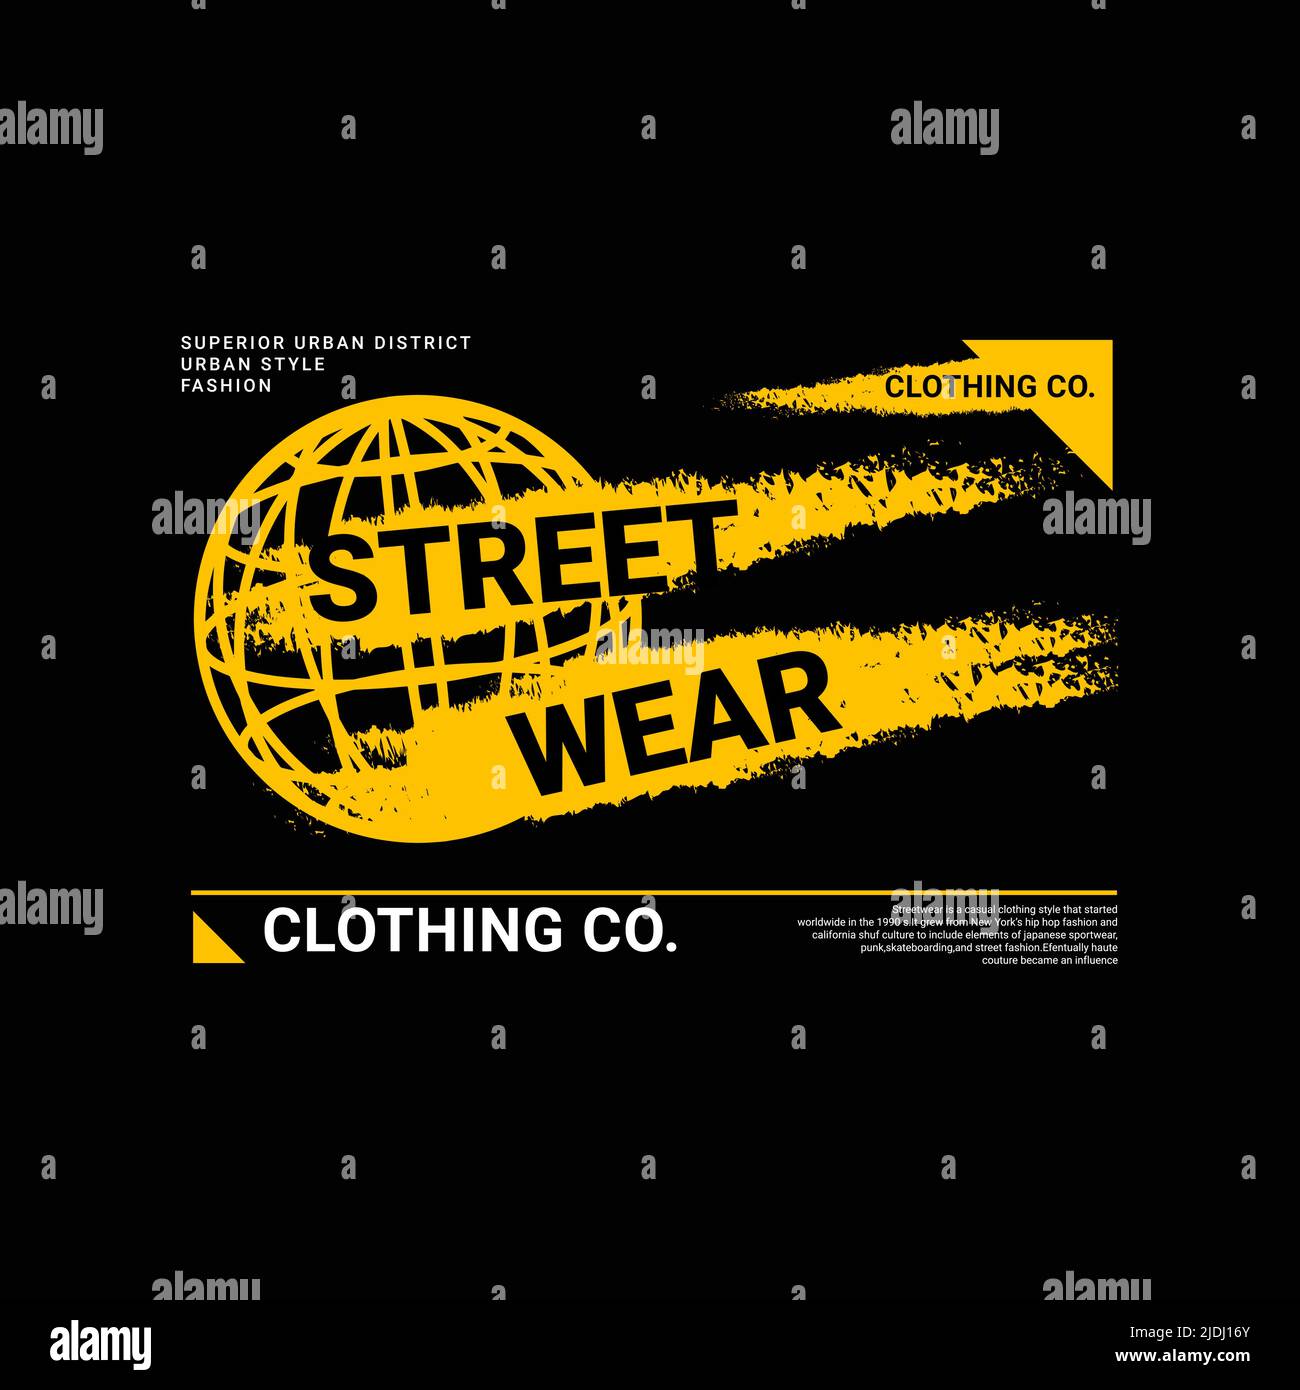 Clothing brand logos vector  Clothing brand logos, Streetwear logo, Urban clothing  brands